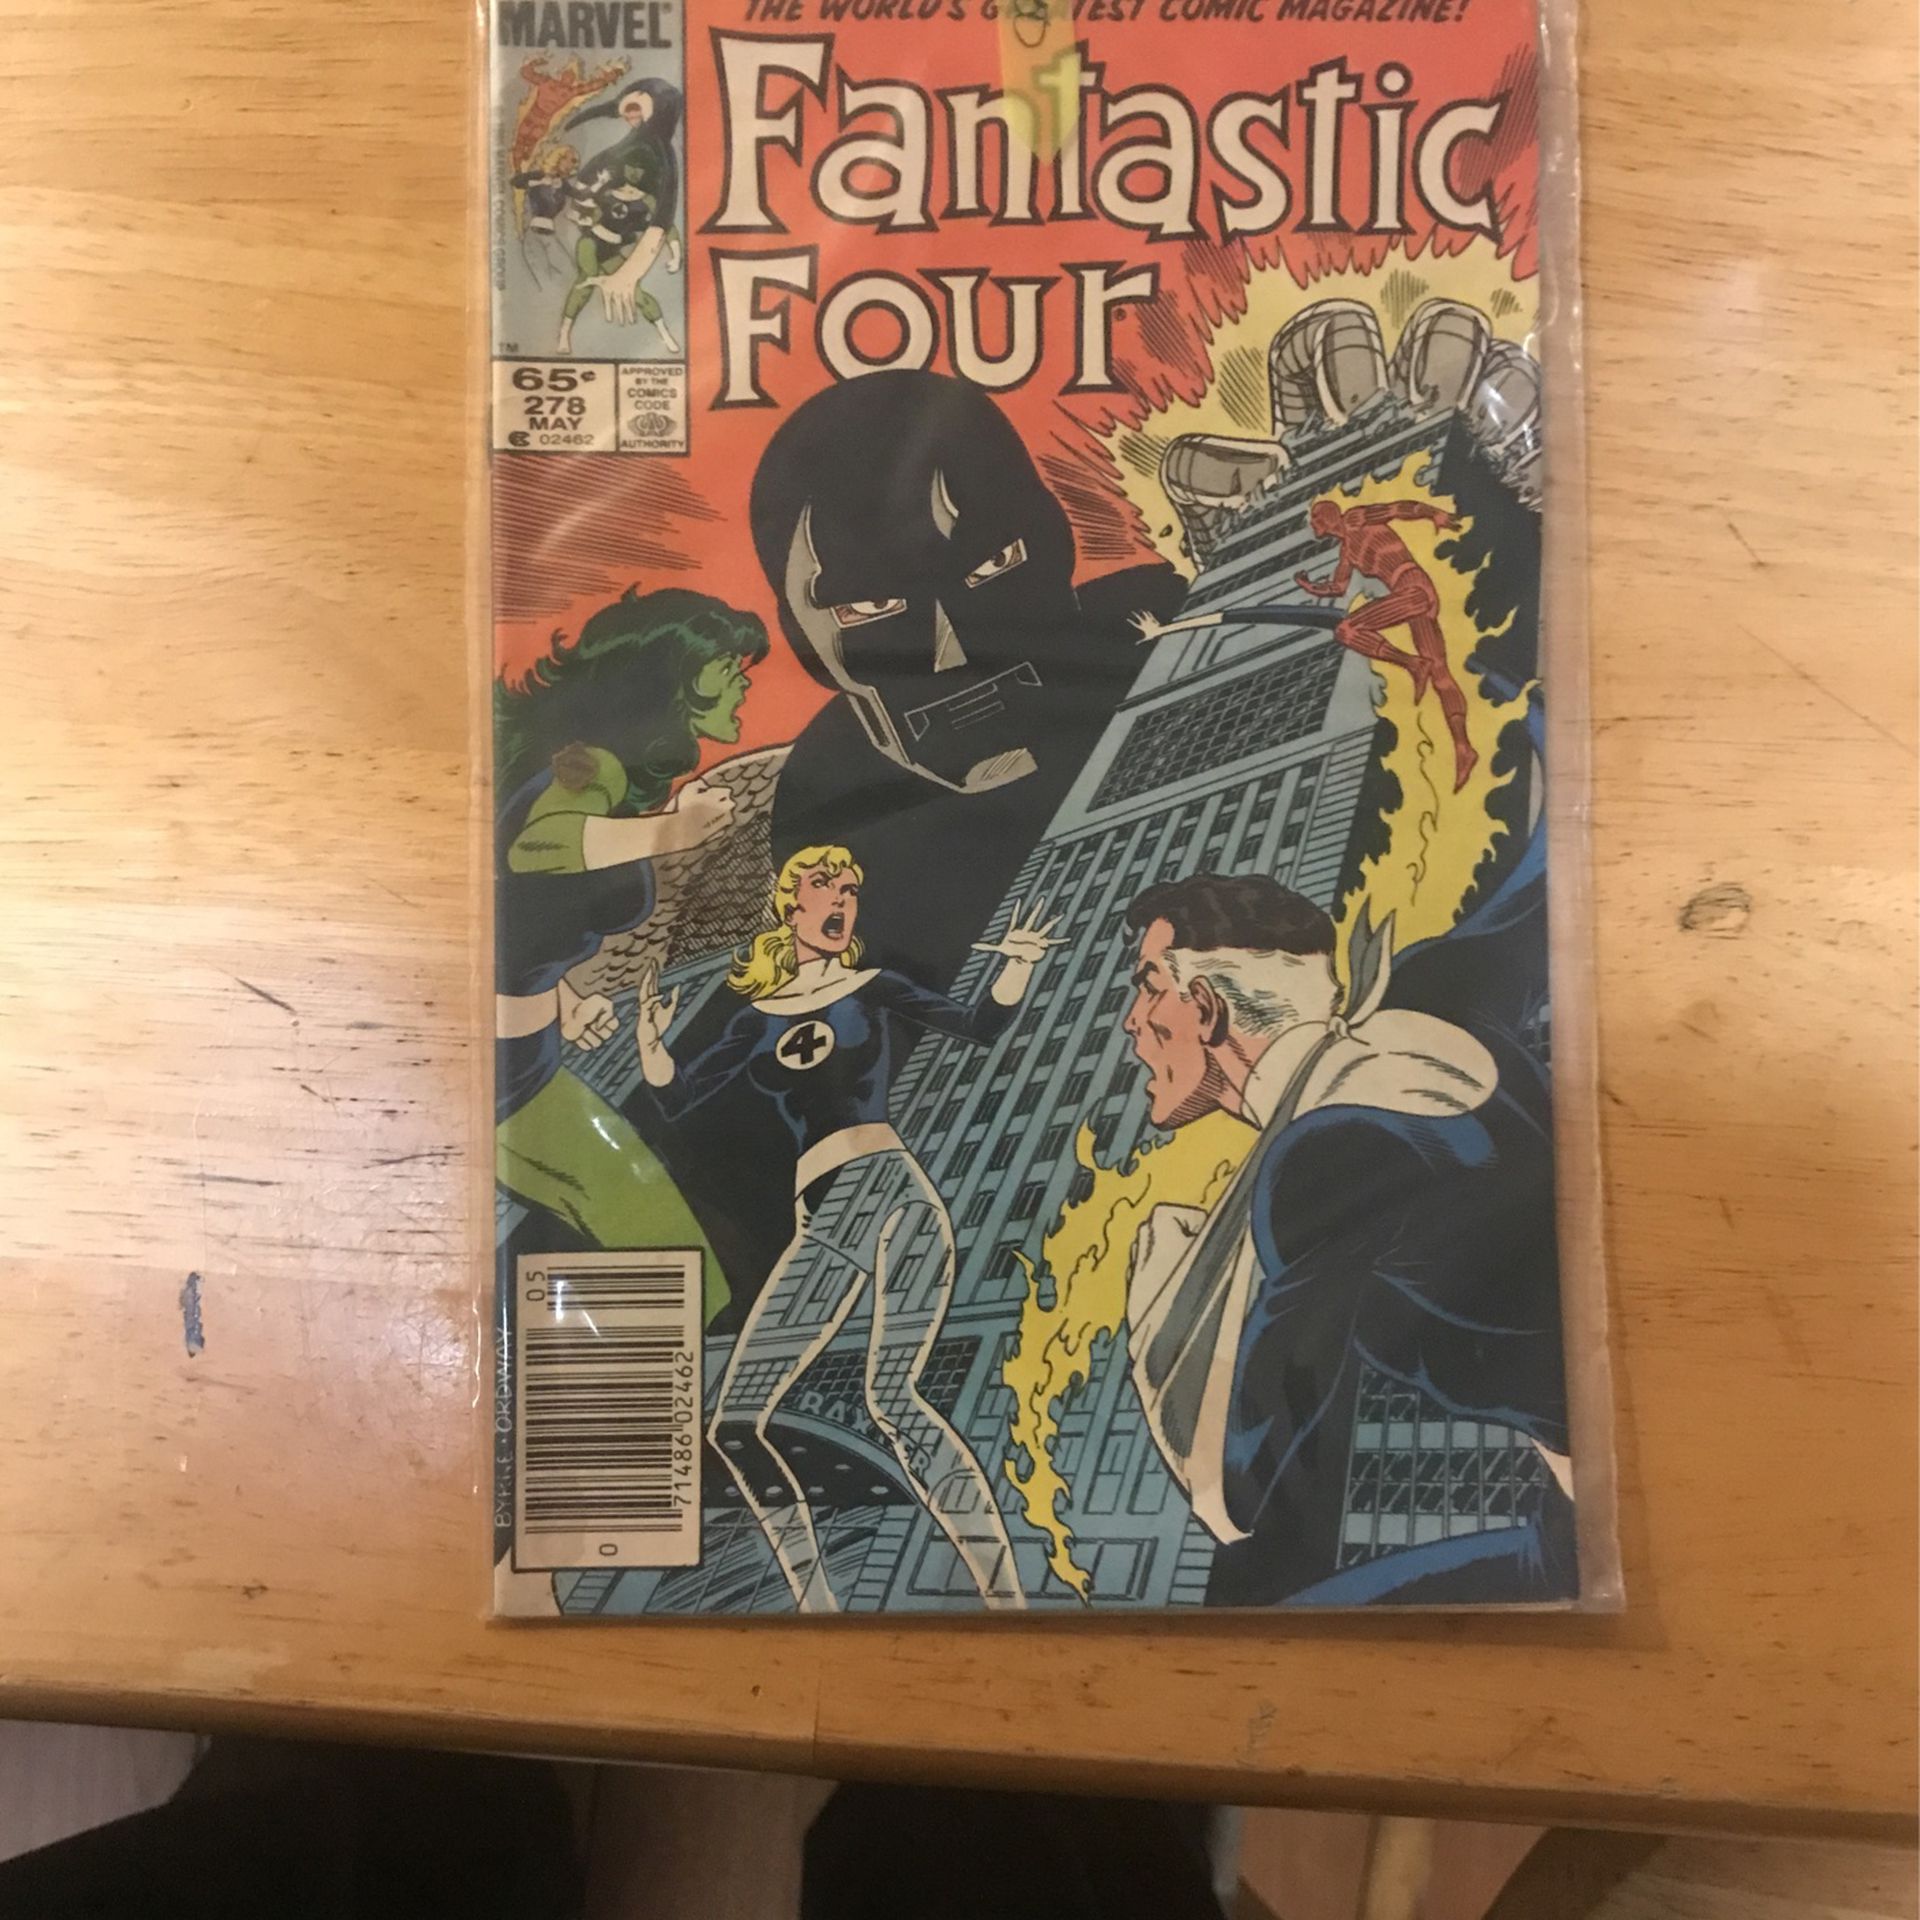 Fantastic Four # 278